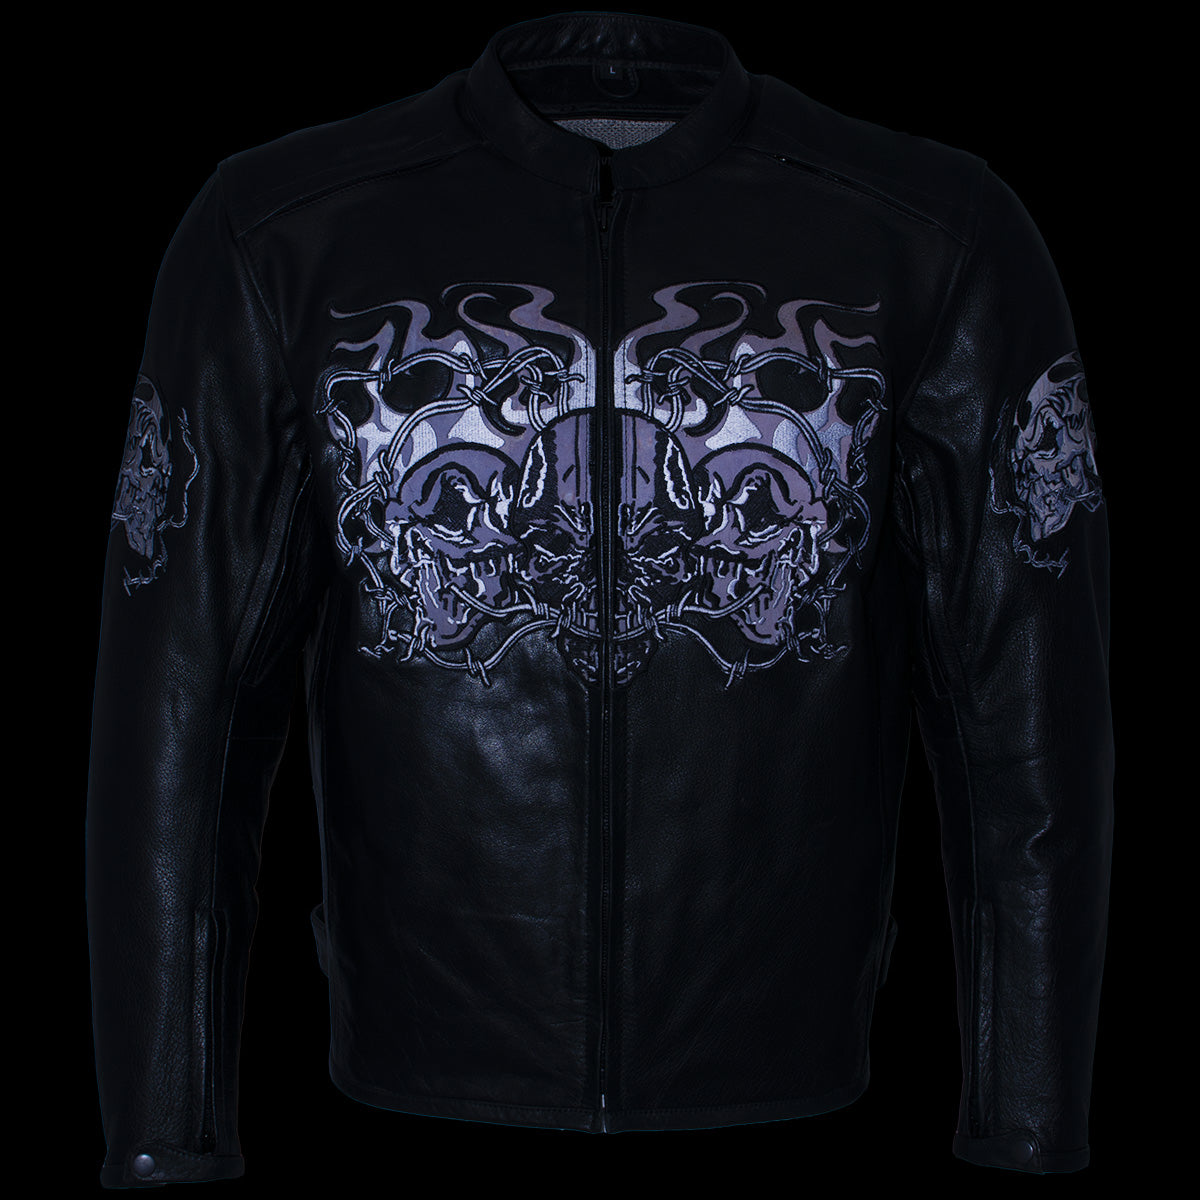 Xelement B95010 Men's 'Bones' Black Armored Cruiser Motorcycle Jacket with Reflective Skulls